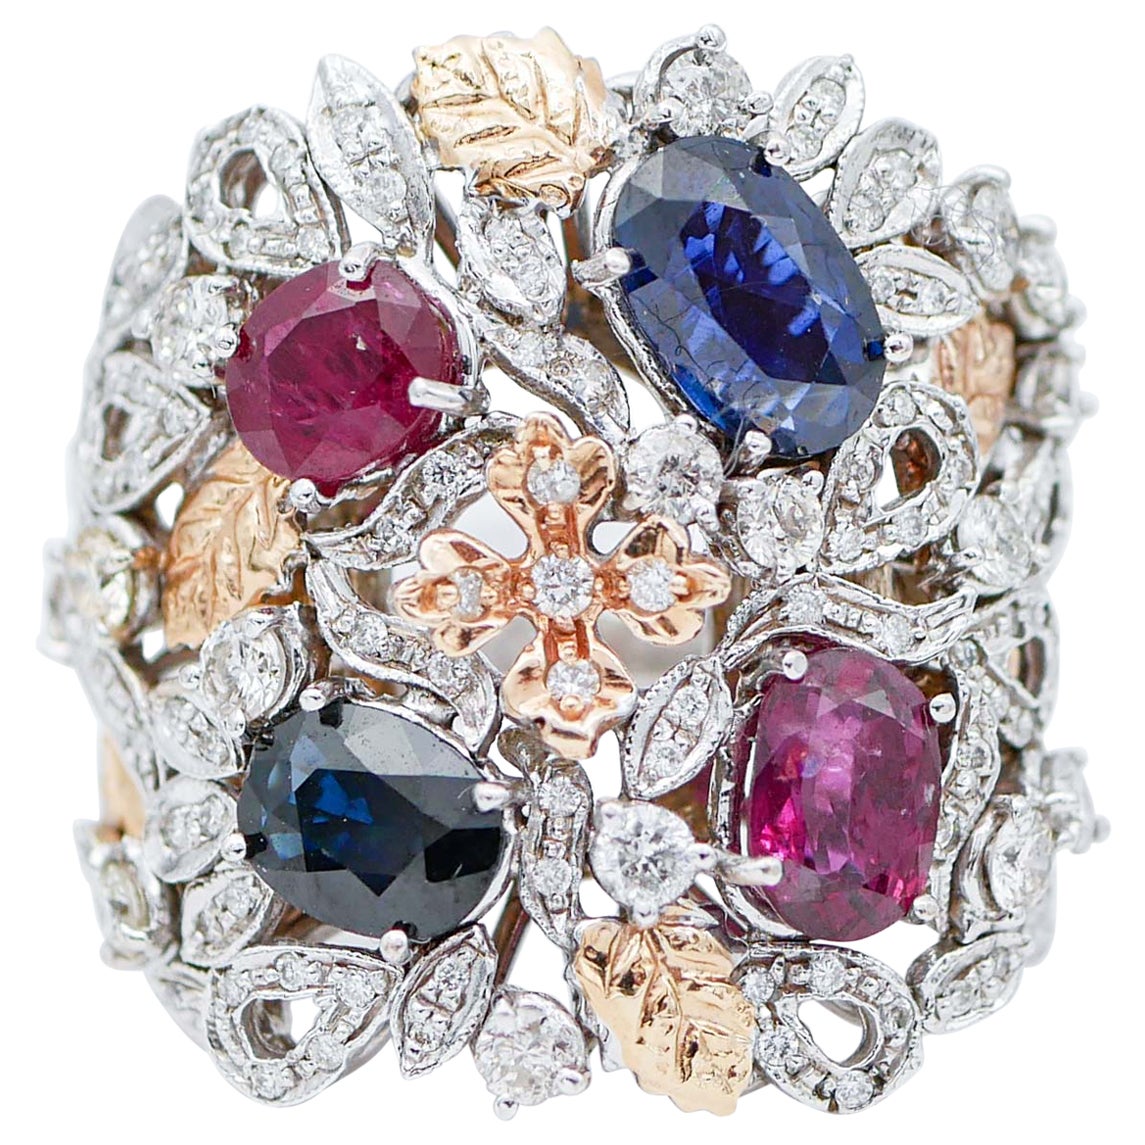 Sapphires, Rubies, Diamonds, 14 Karat White and Rose Gold Ring.